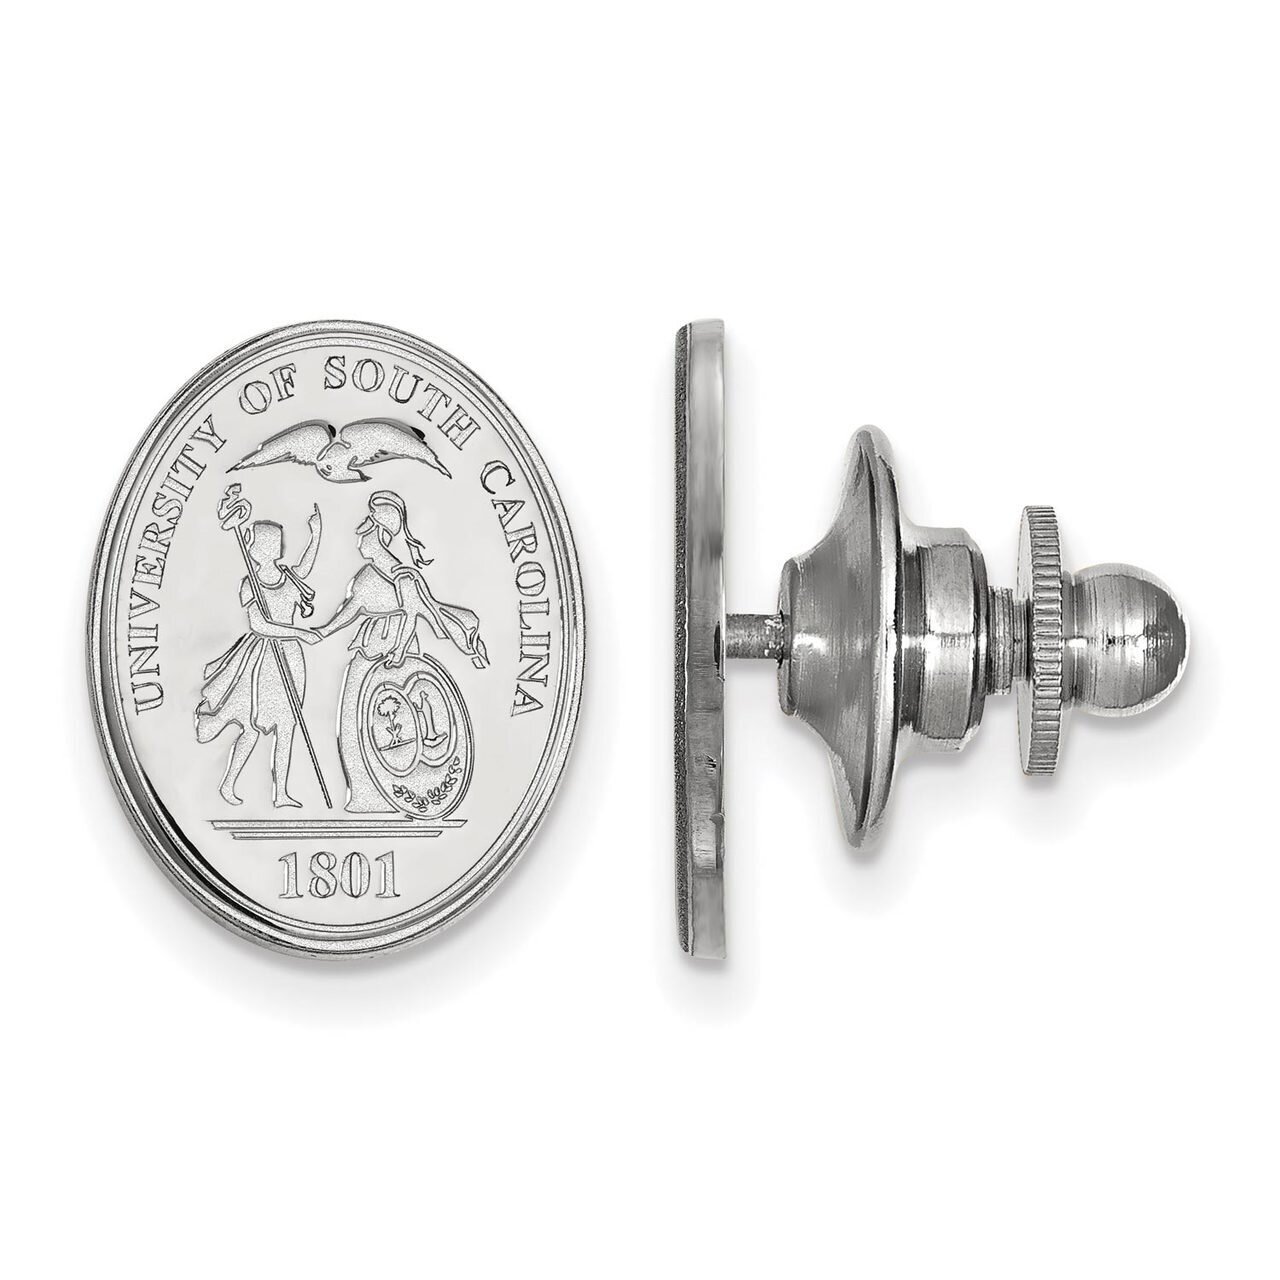 University of South Carolina Crest Lapel Pin Sterling Silver SS066USO